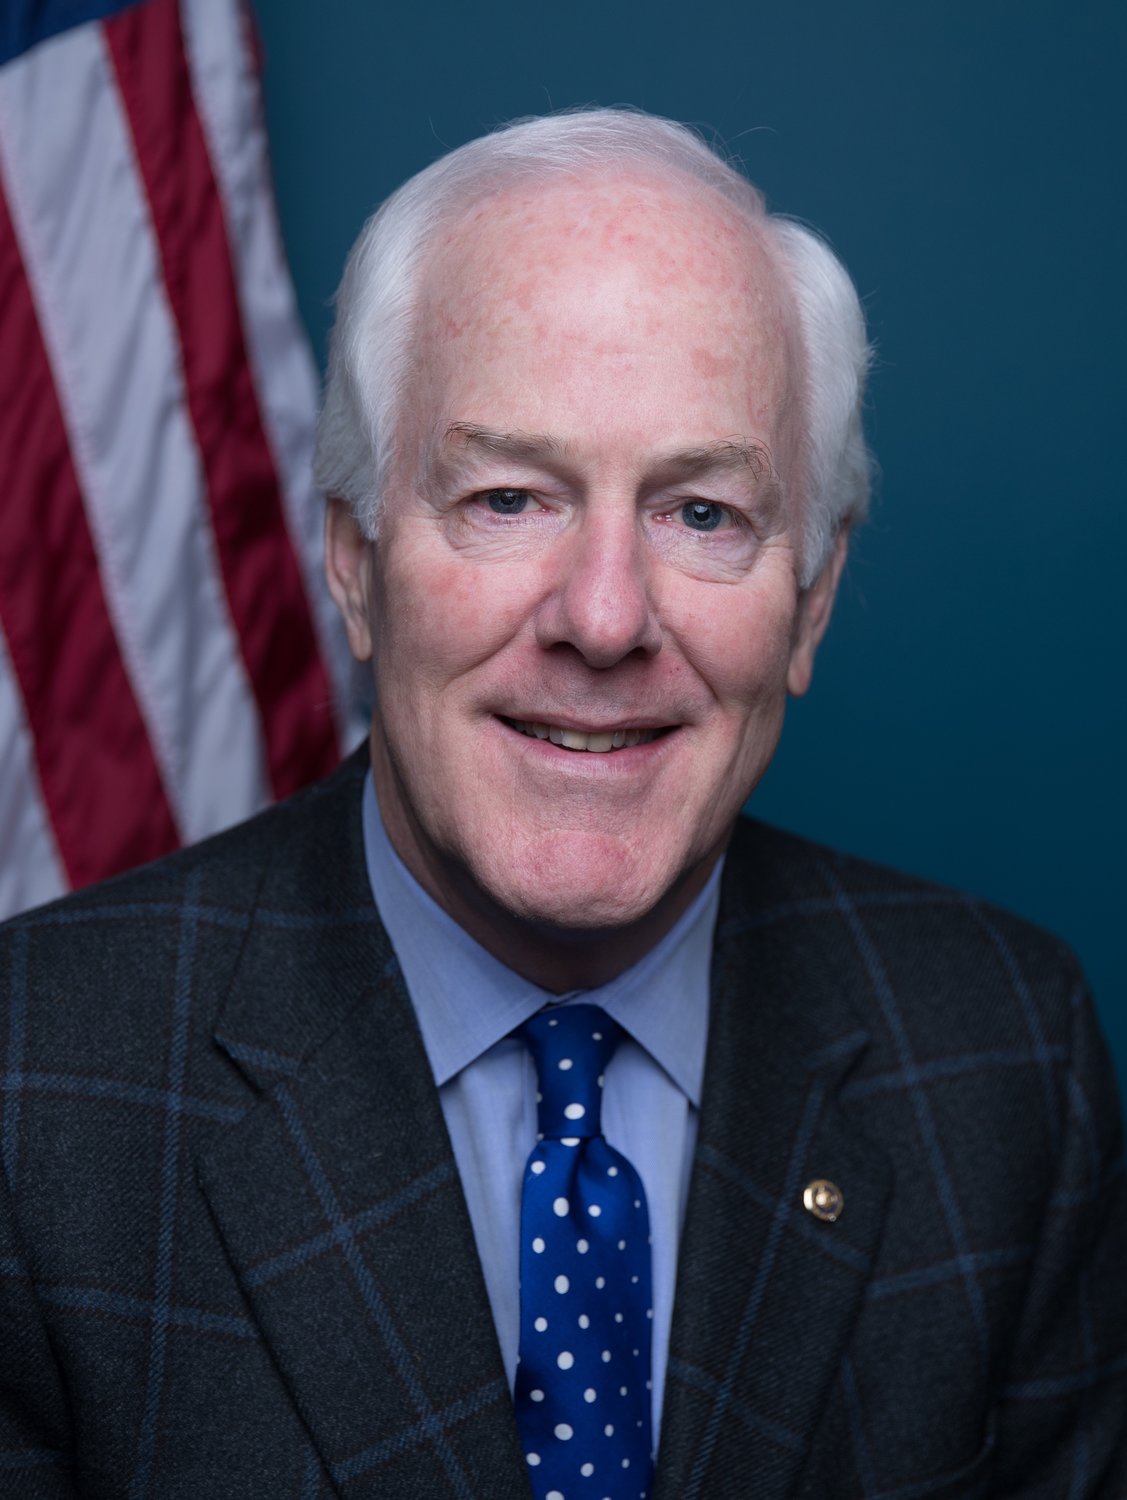 U.S. Senator John Cornyn, a Republican from Texas, is a member of the Senate Finance, Intelligence, and Judiciary Committees.